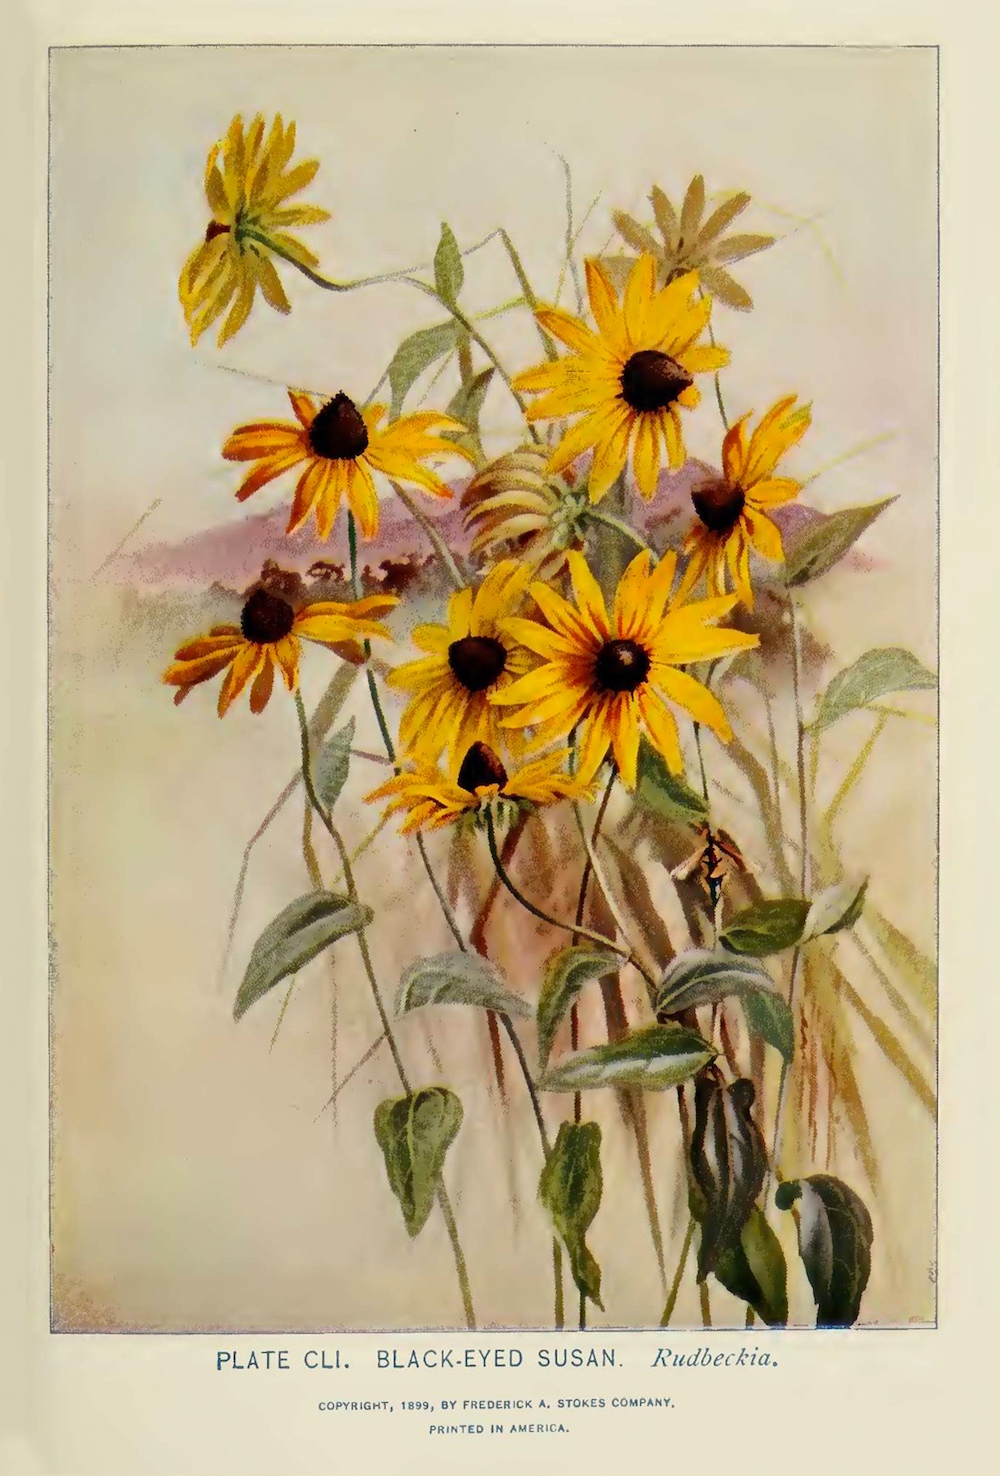 Black-eyed Susan botanical illustration by Alice Lounsberry circa 1899.